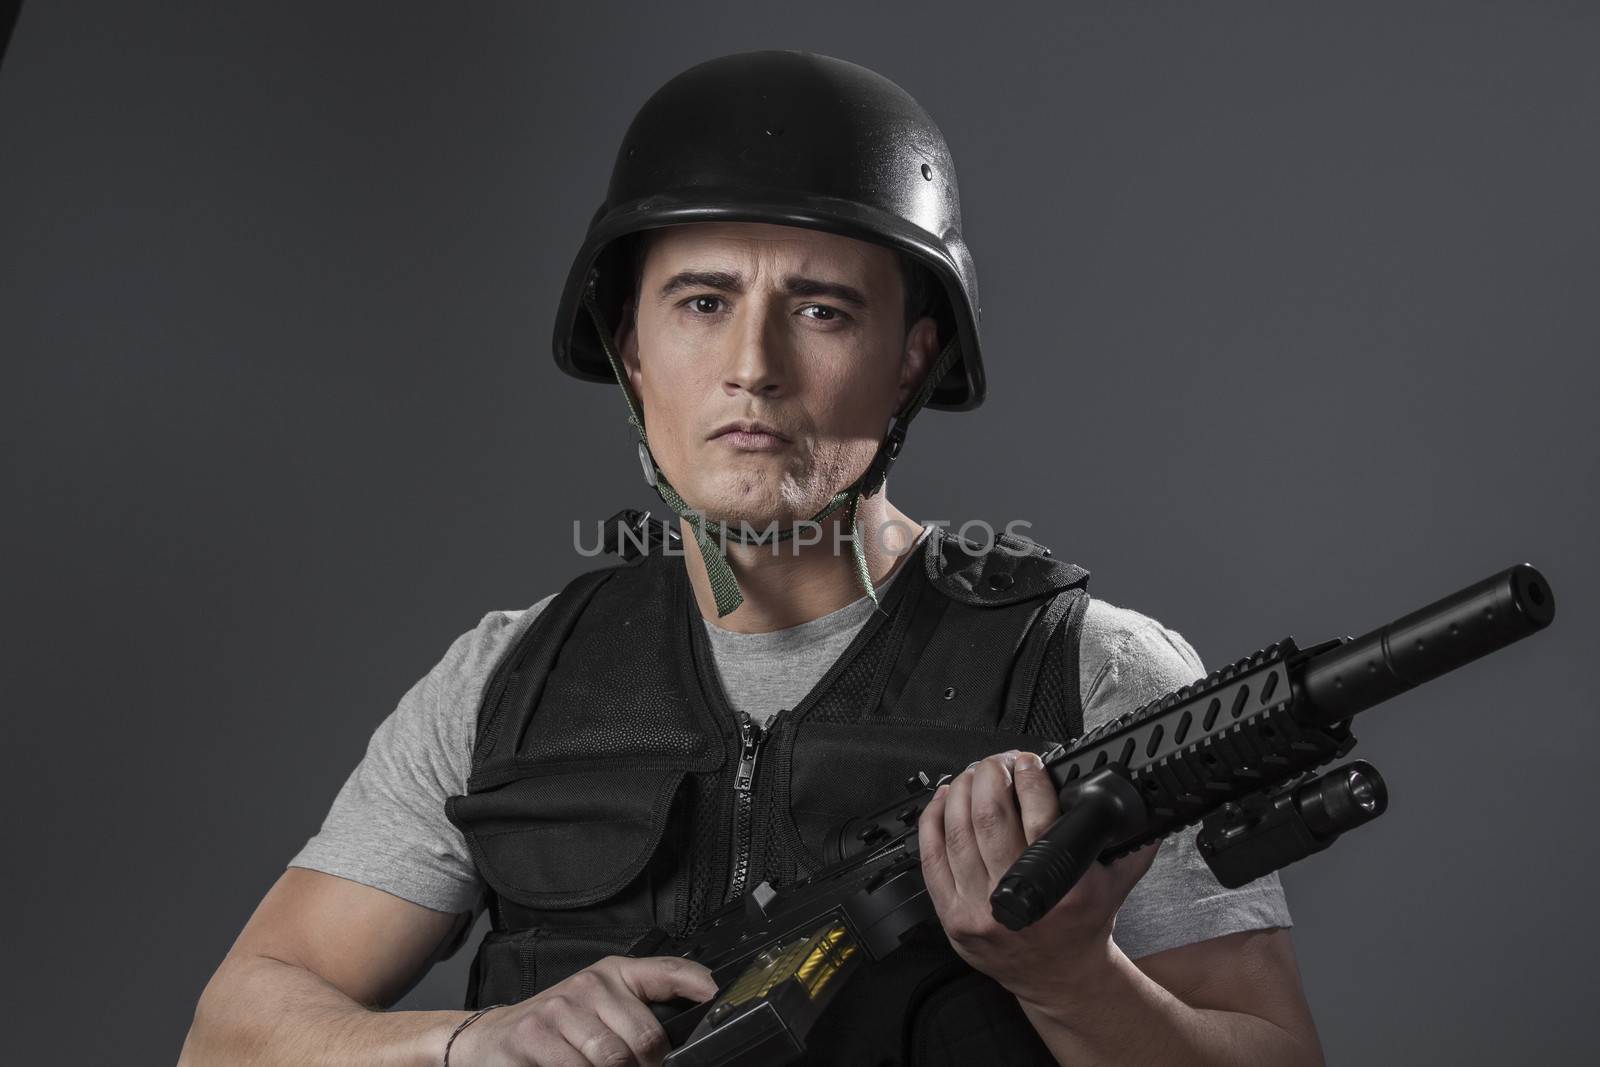 paintball sport player wearing protective helmet aiming pistol ,black armor and machine gun